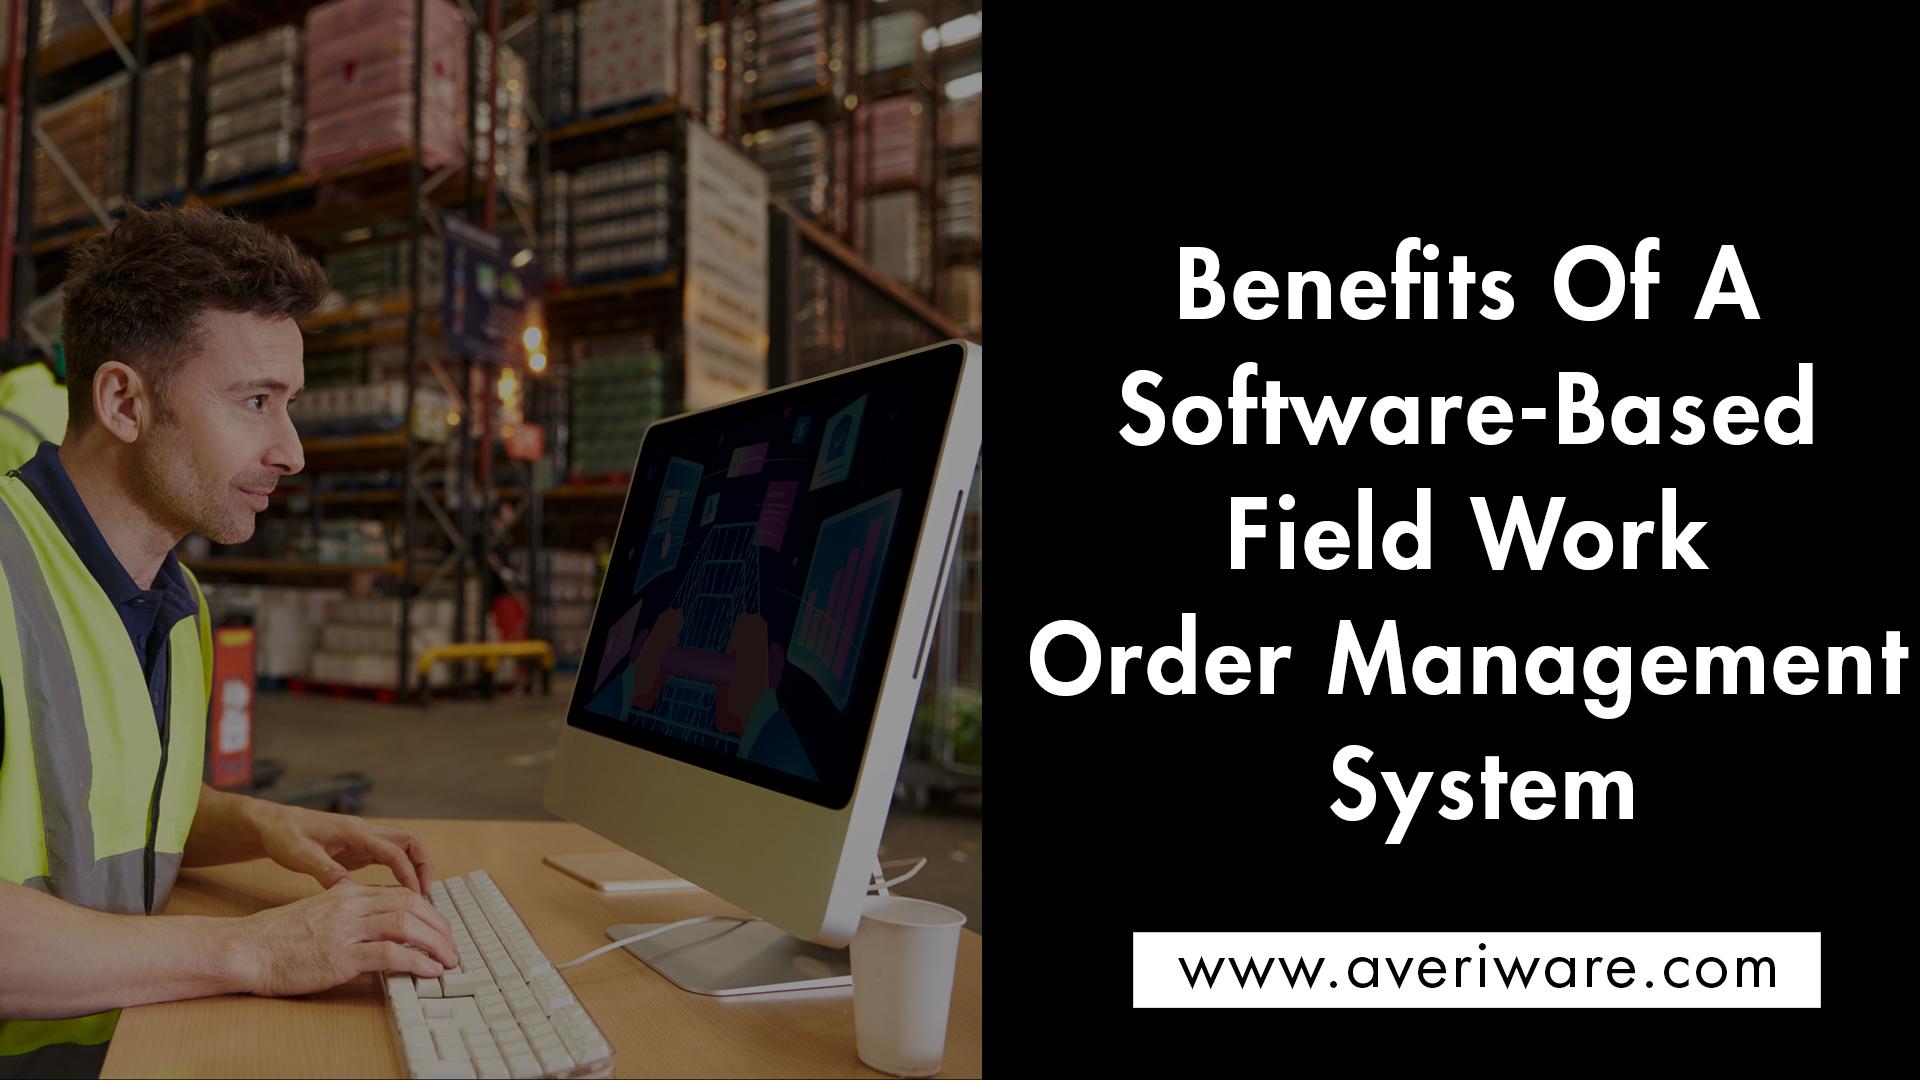 Benefits of Field Work Order Management Software System